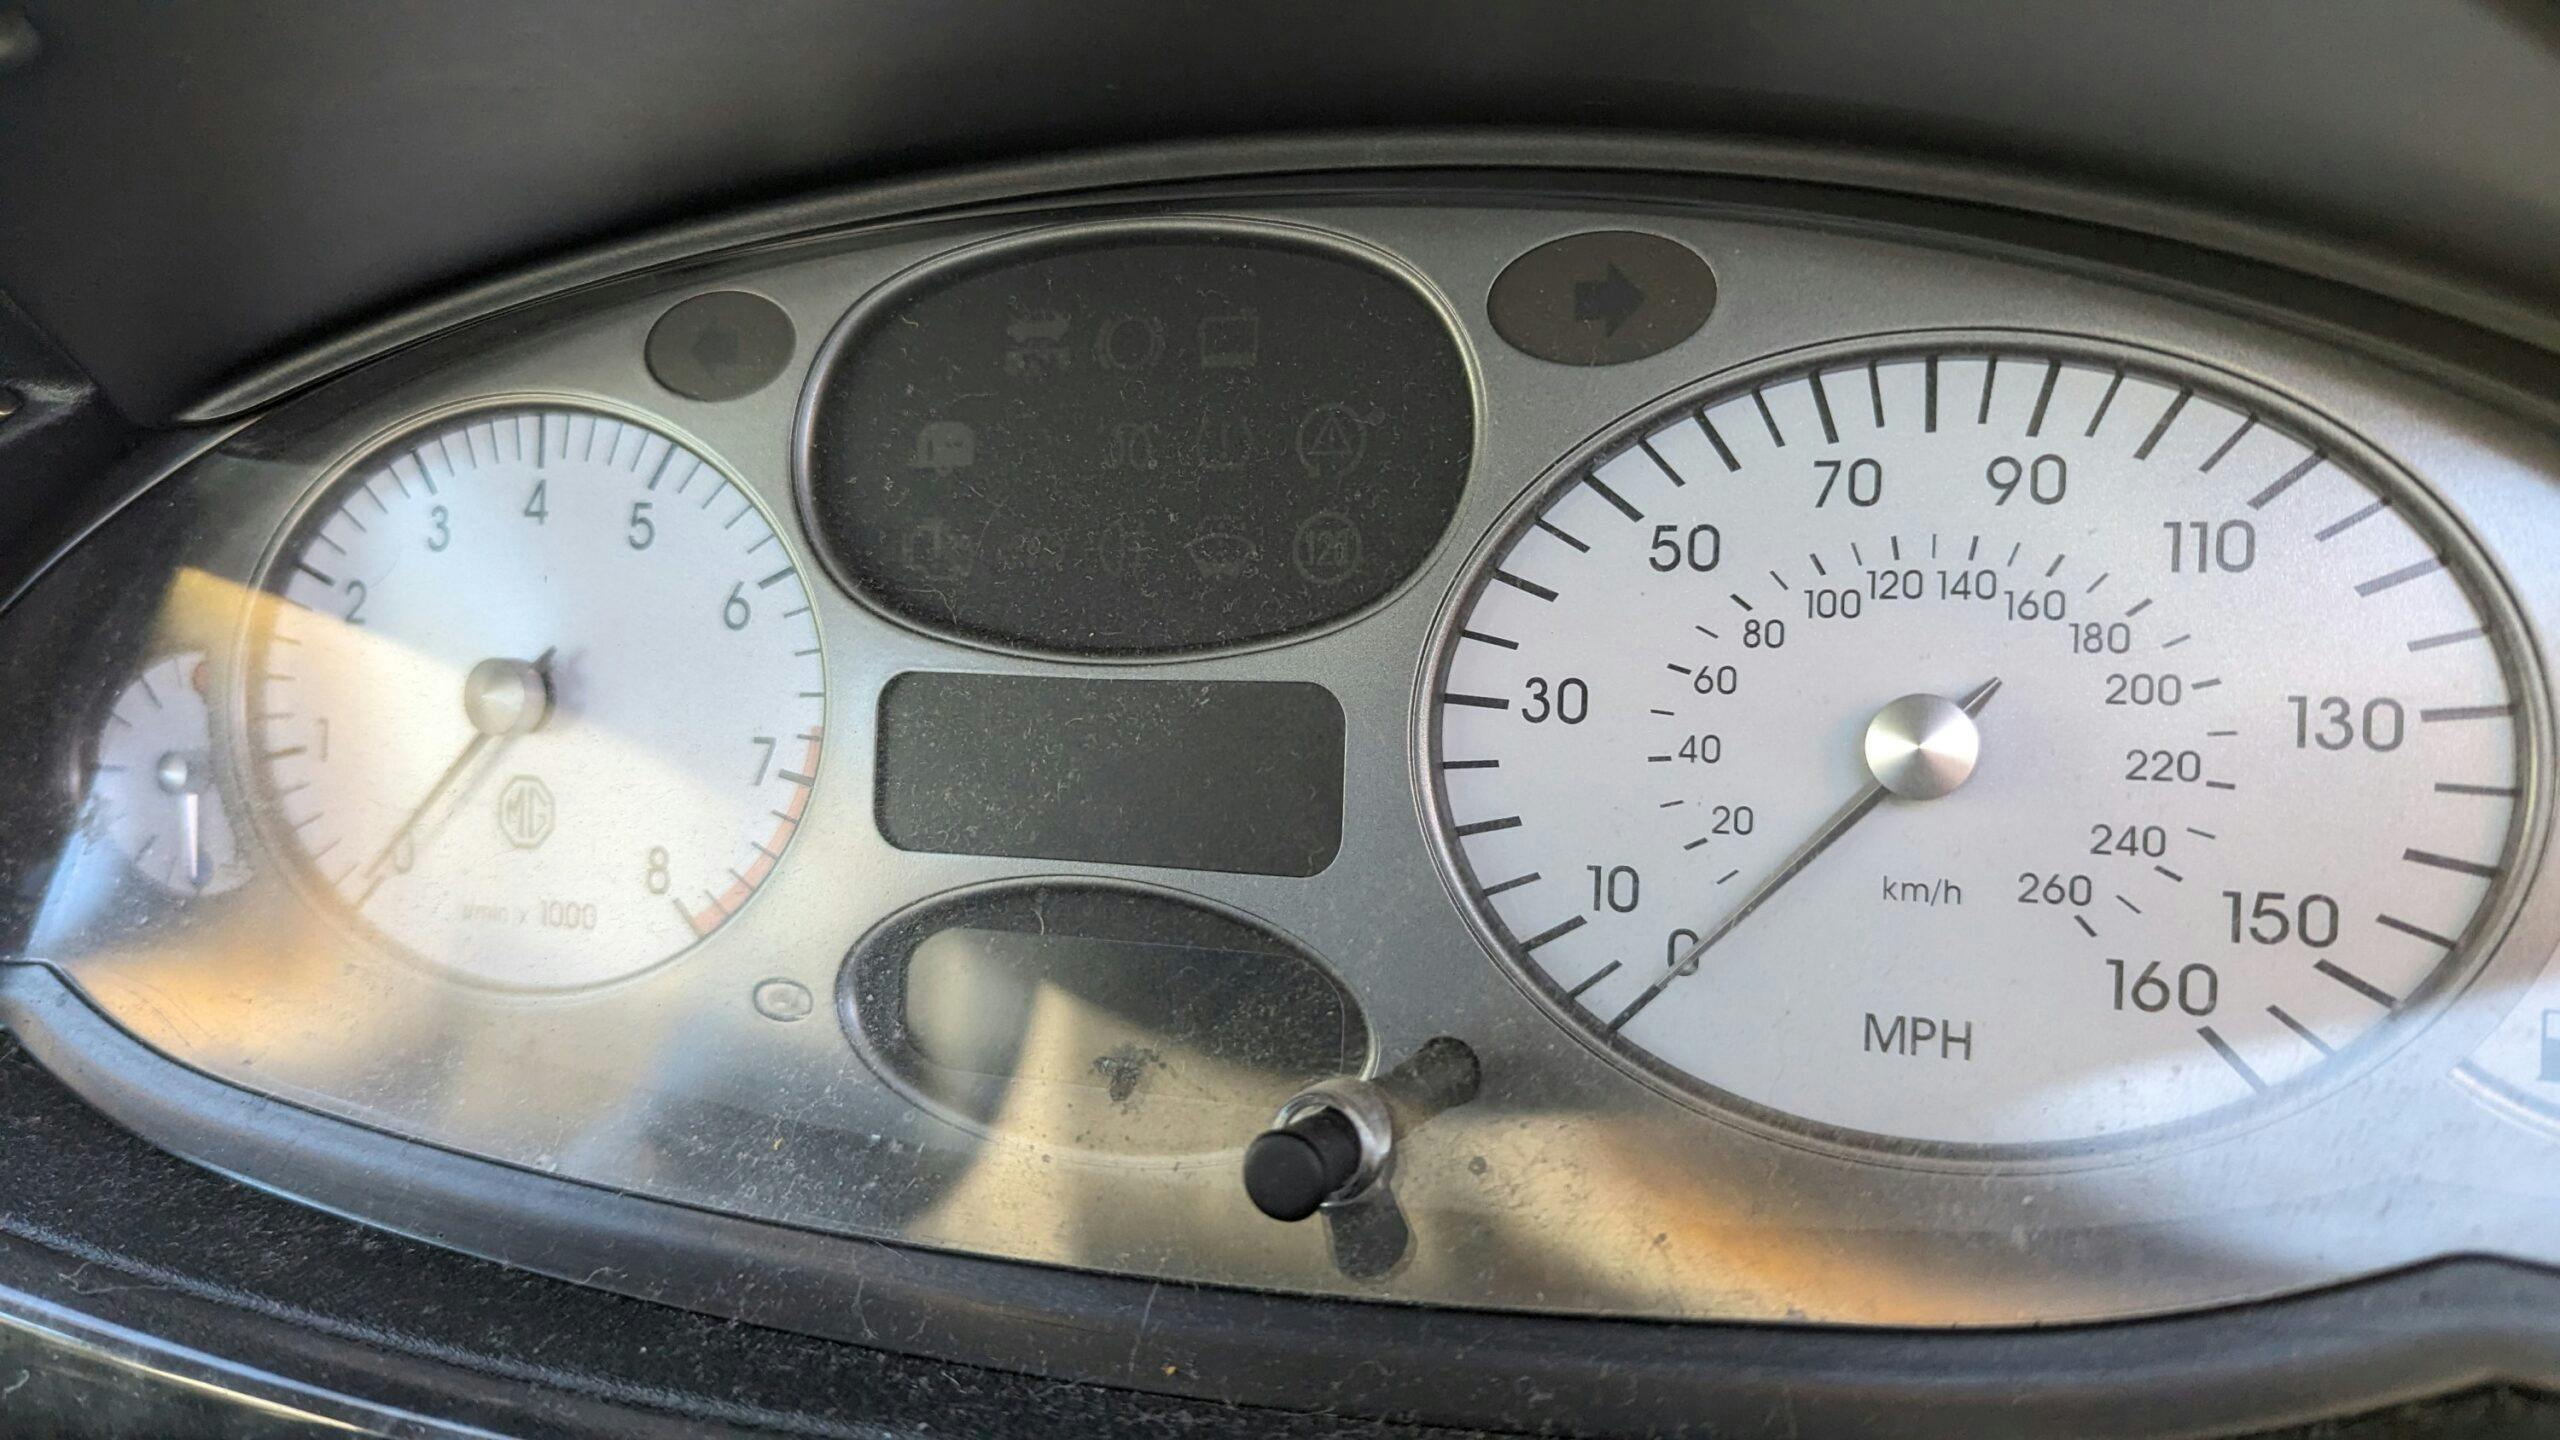 2005 MG ZT 190 dash gauges